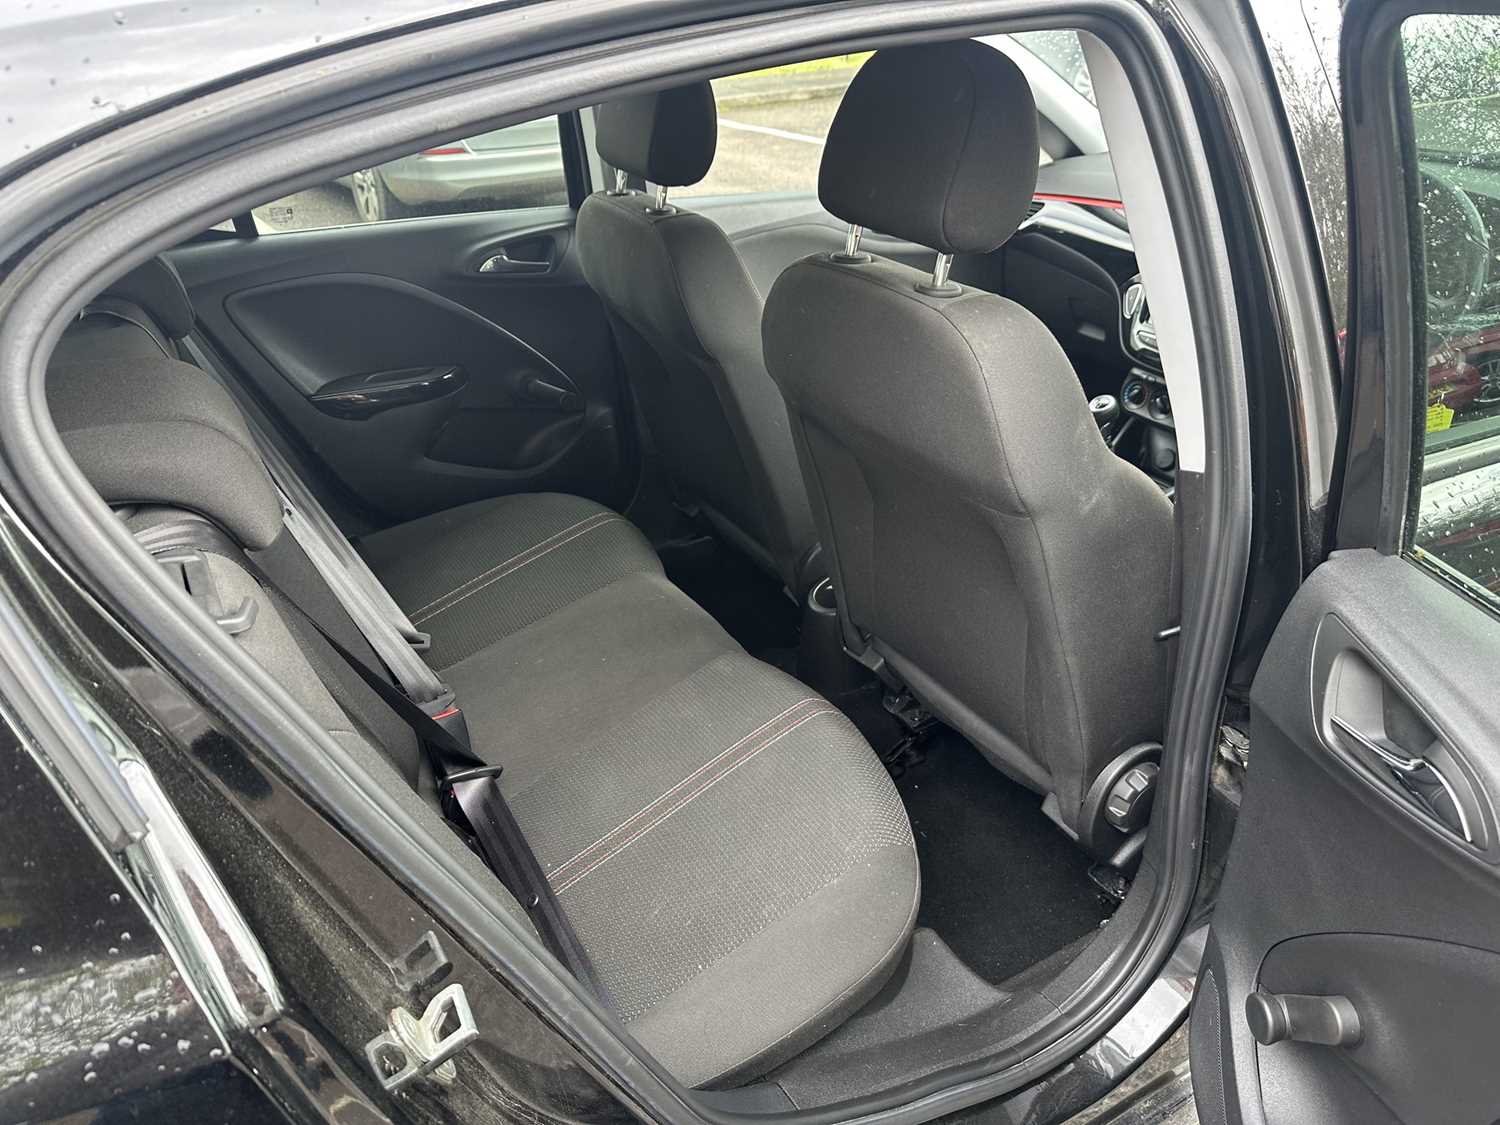 2019 Vauxhall Corsa SRI VX - Line Nav Black, 5 door hatchback, manual, reg. no. VU19 RYK - Image 9 of 15